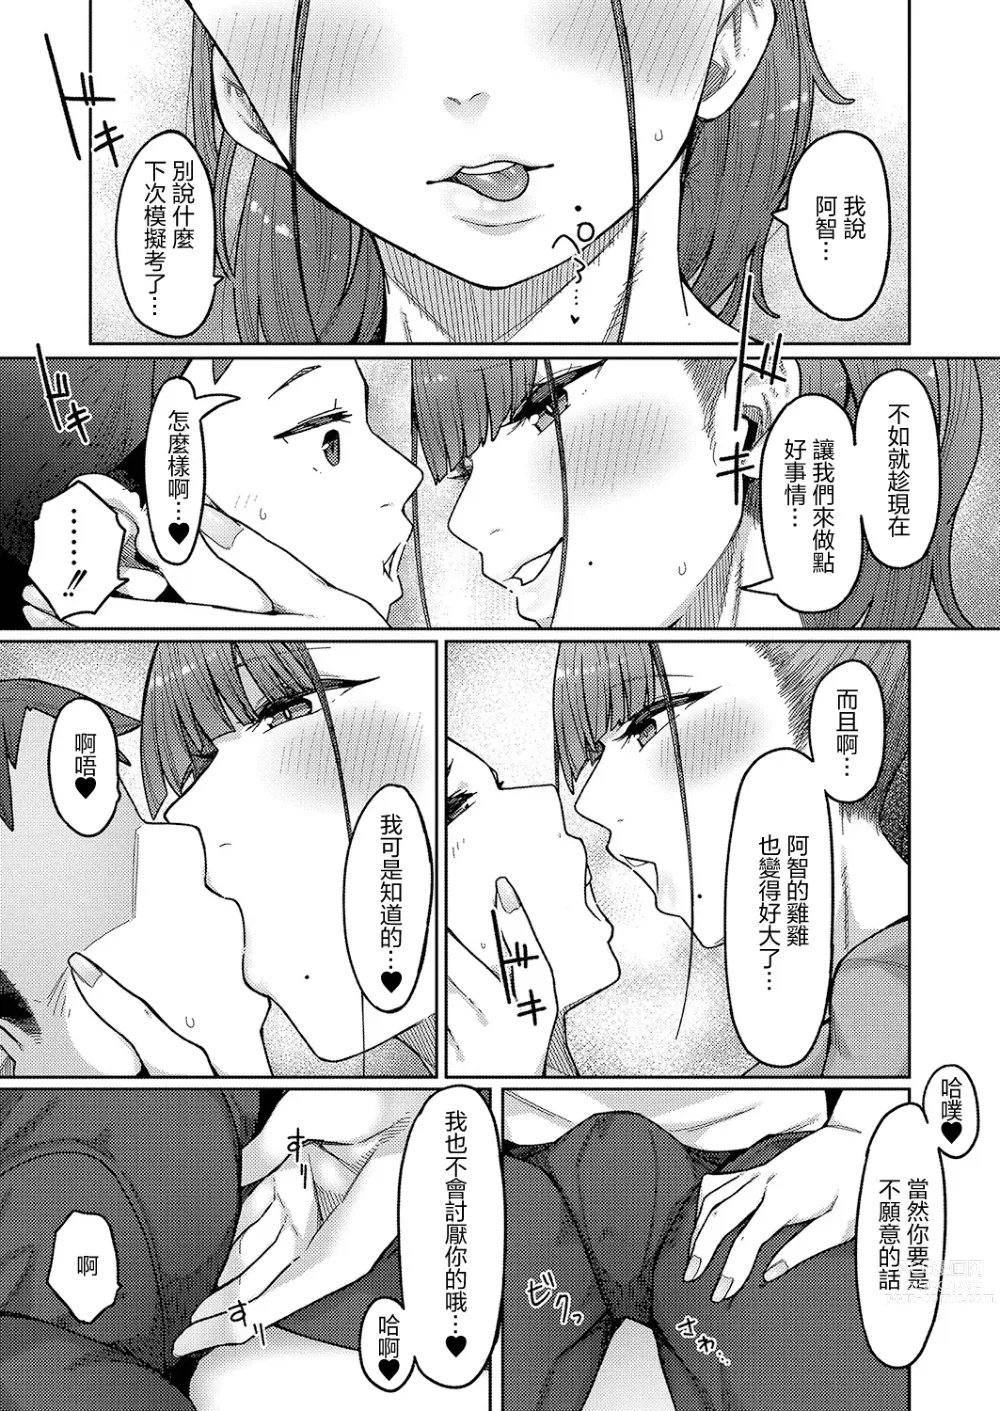 Page 3 of manga 和姐姐一起!